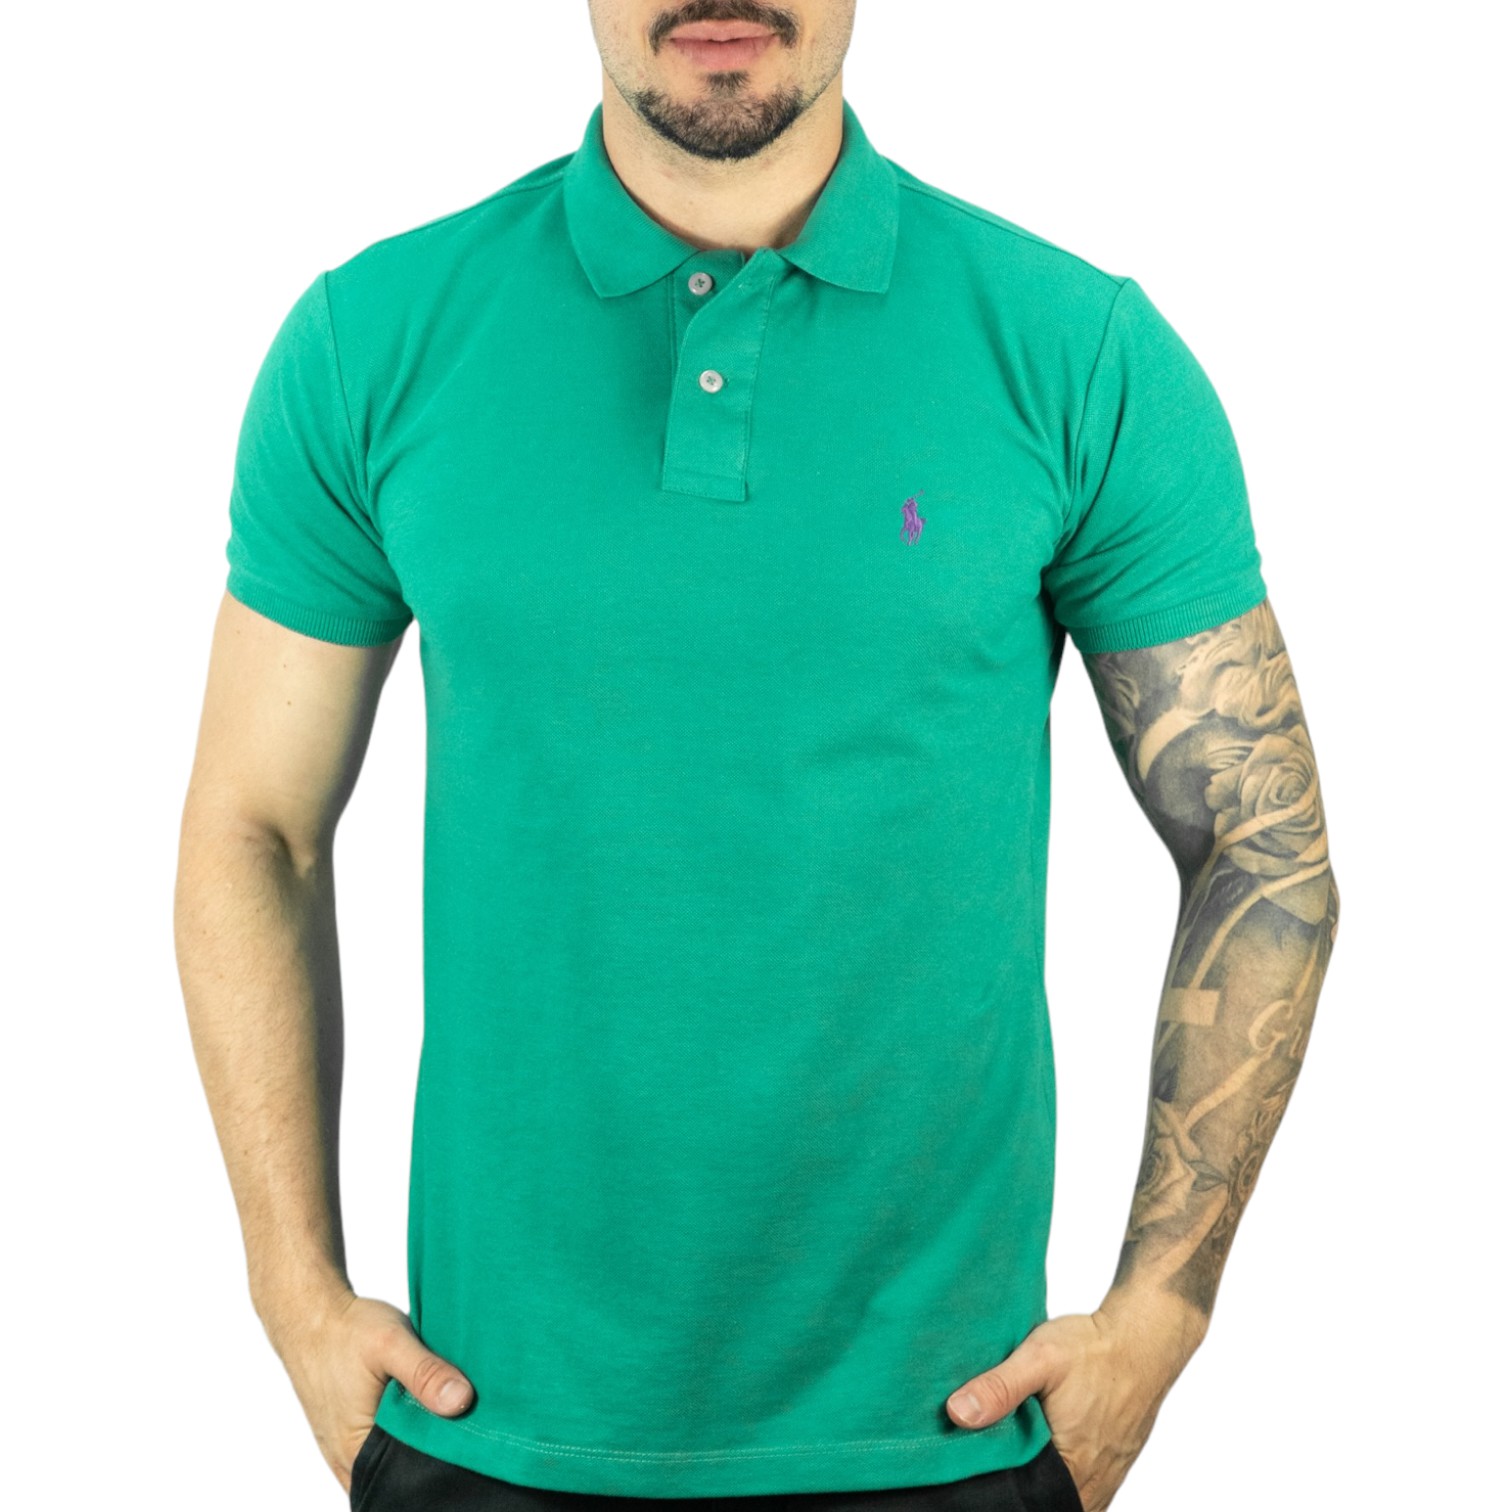 Camisa Polo Tommy Hilfiger Verde Mescla - Outlet360